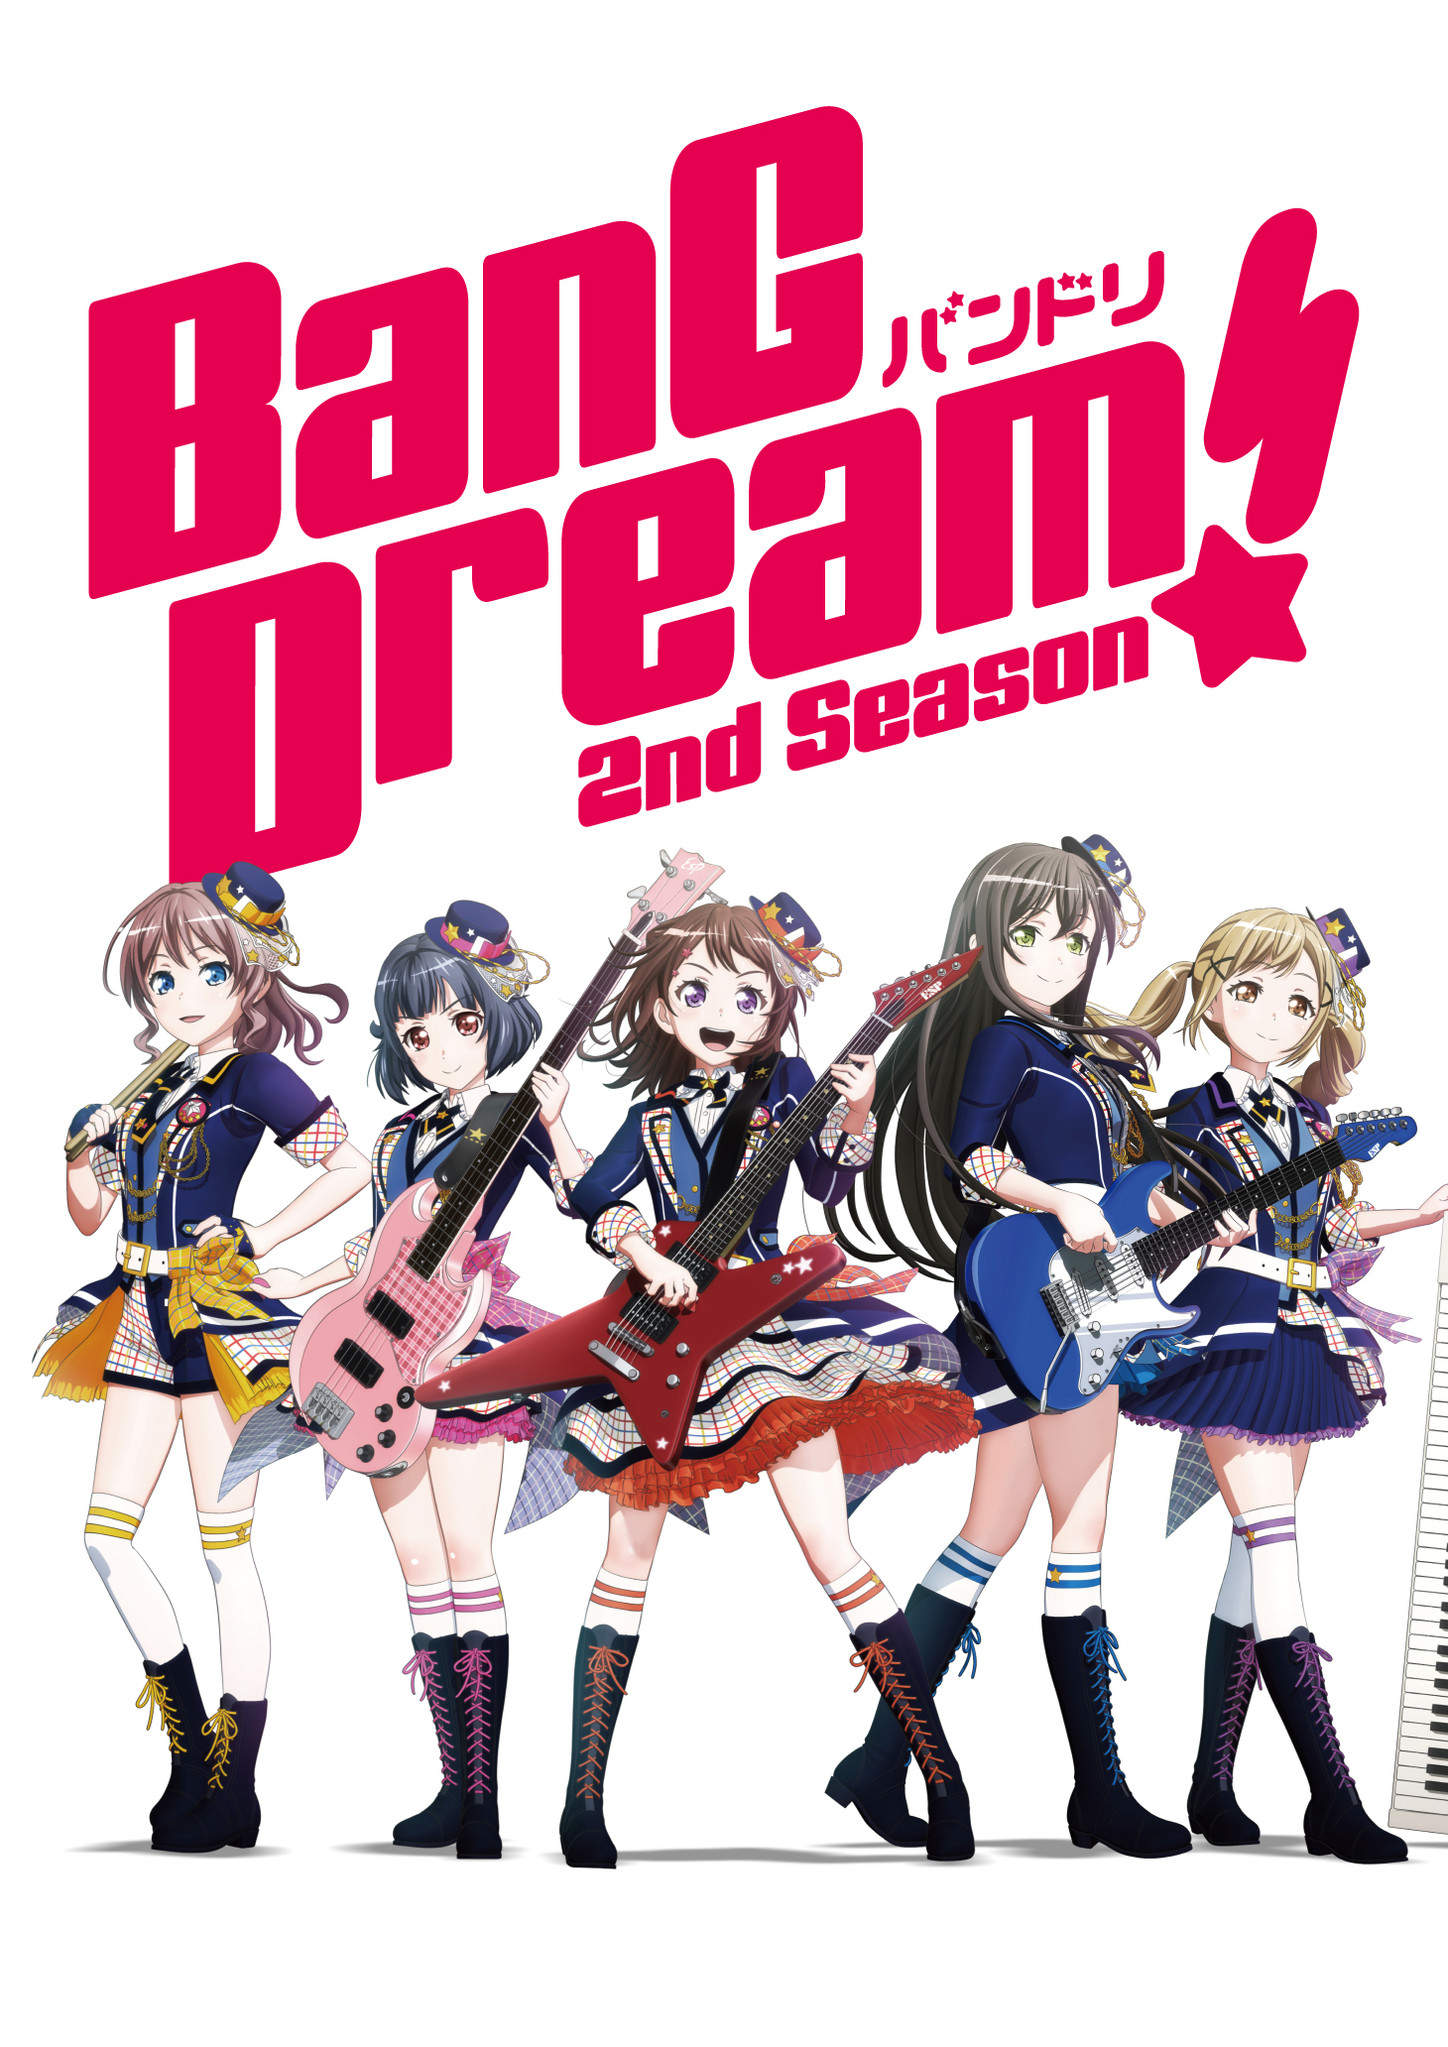 Youtube バンドリちゃんねる にてアニメ Bang Dream 2nd Season アニメ Bang Dream 3rd Season 期間限定配信決定 株式会社ブシロードのプレスリリース